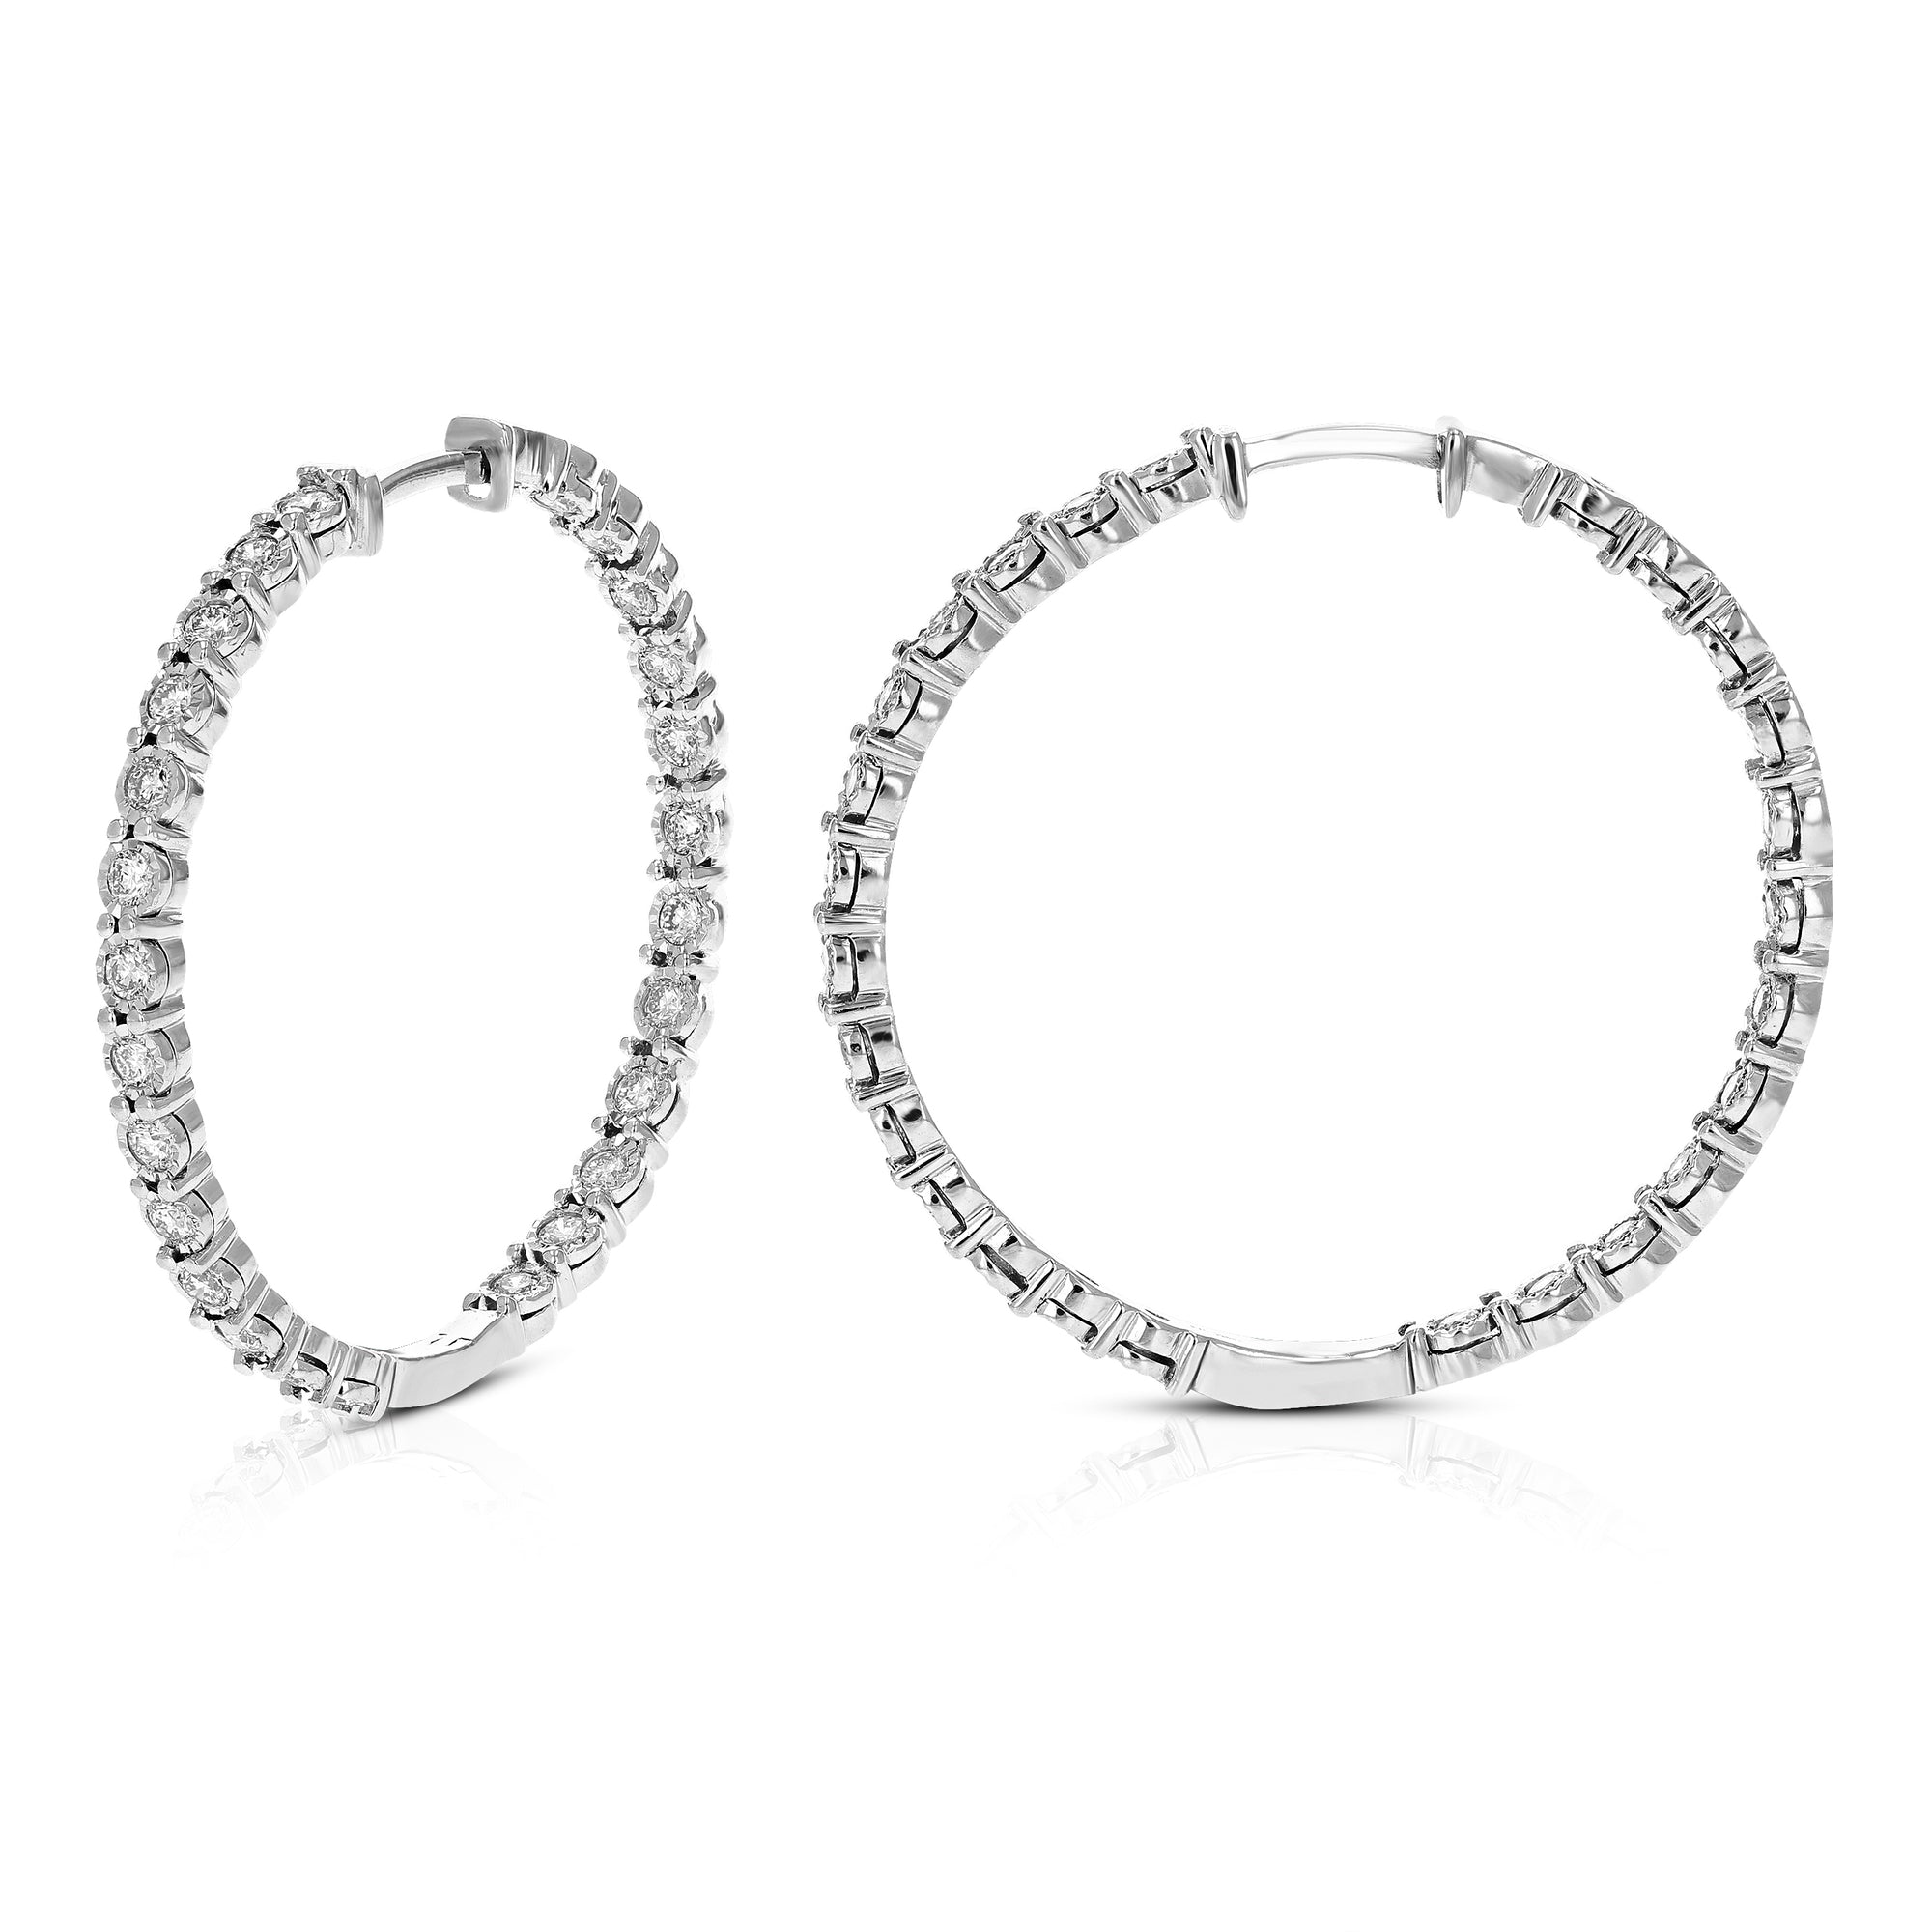 1 cttw Diamond Hoop Earrings for Women, Round Lab Grown Diamond Earrings in .925 Sterling Silver, Prong Setting, 1 1/4 Inch